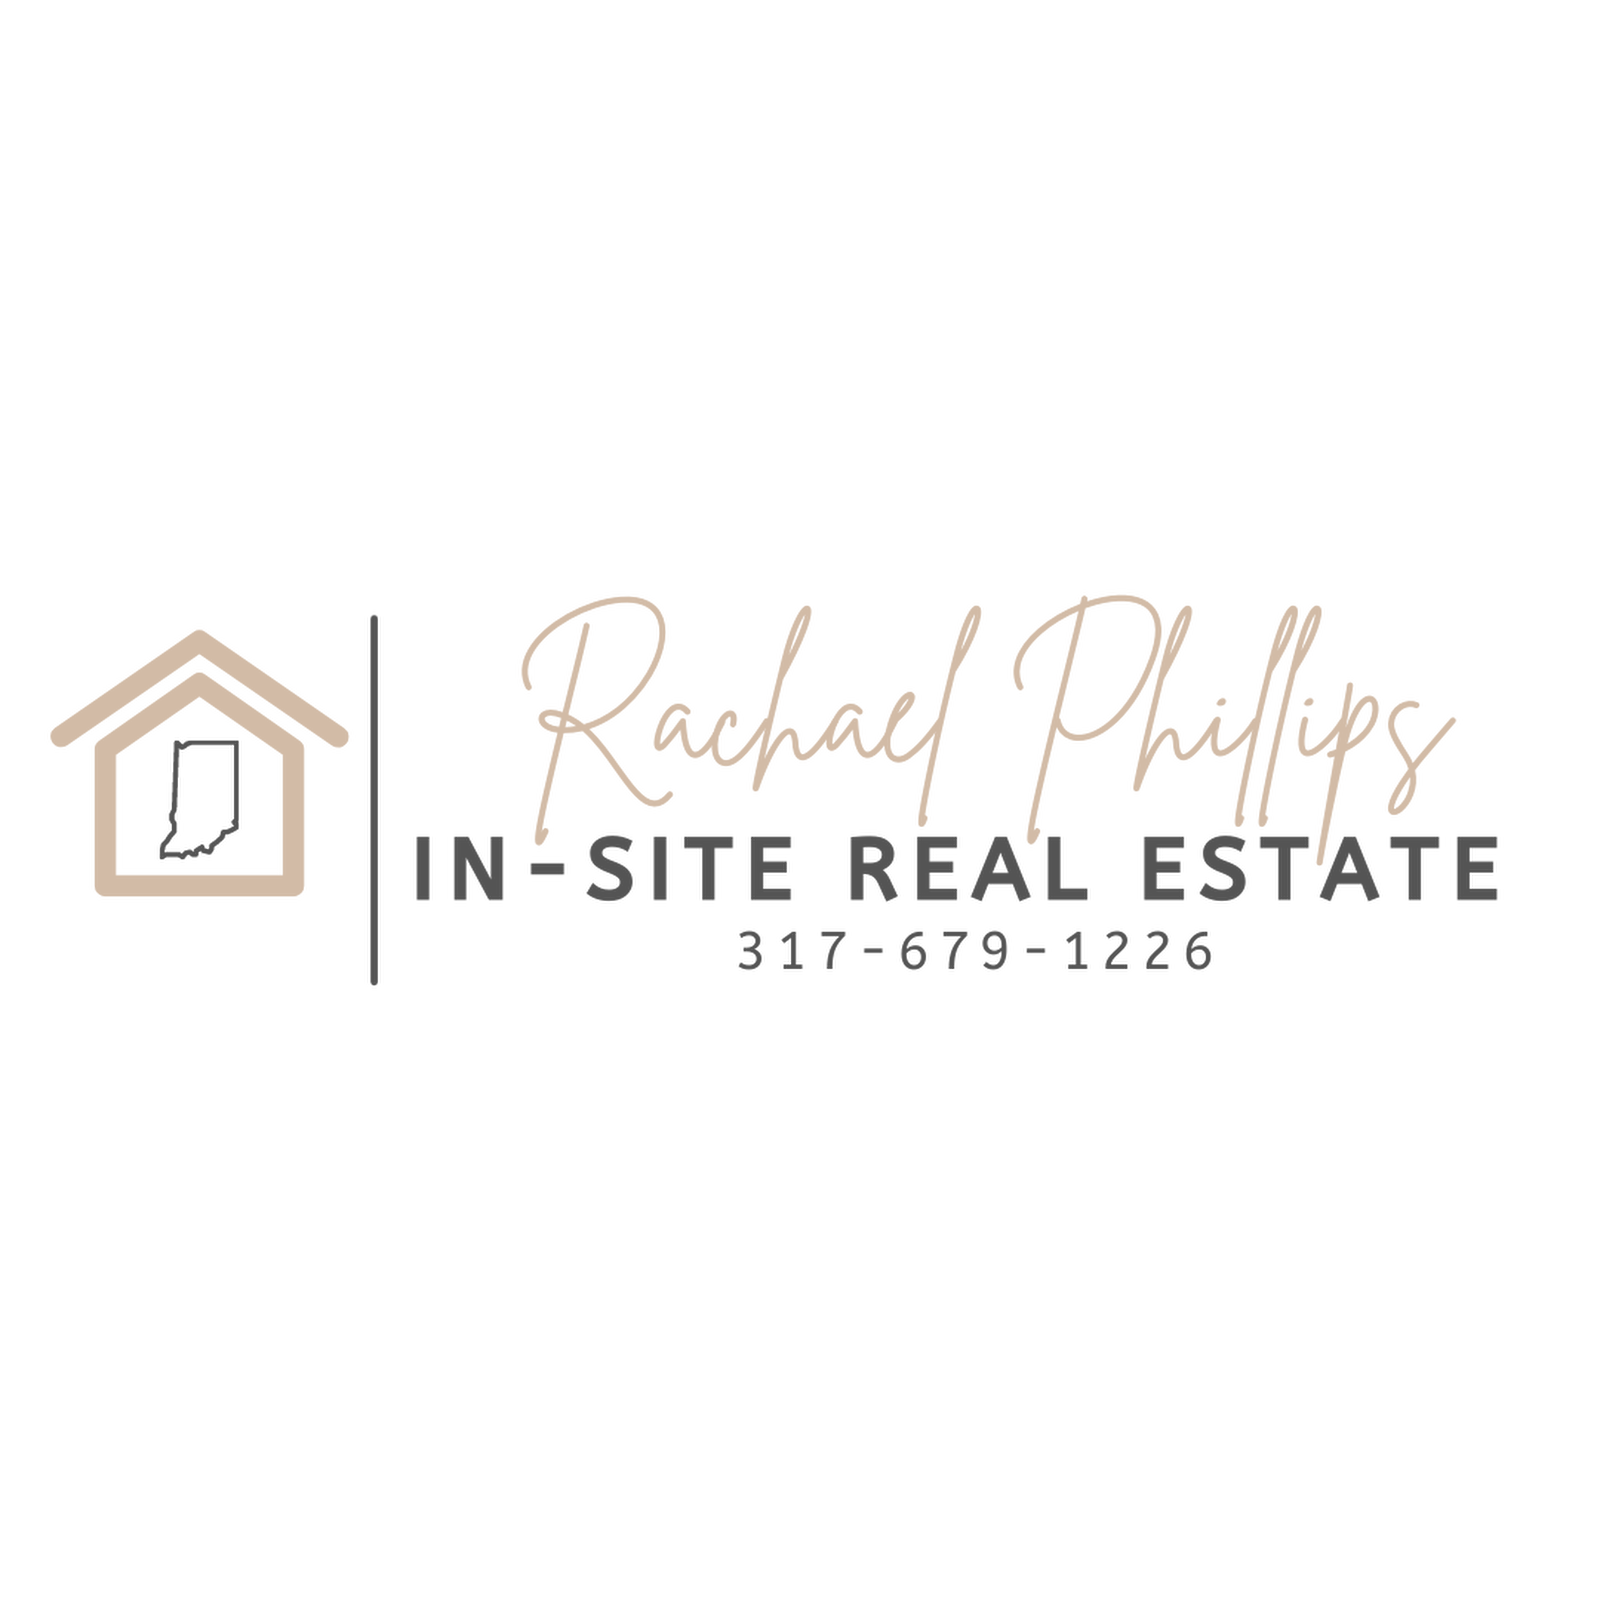 Rachel Phillips Real Estate